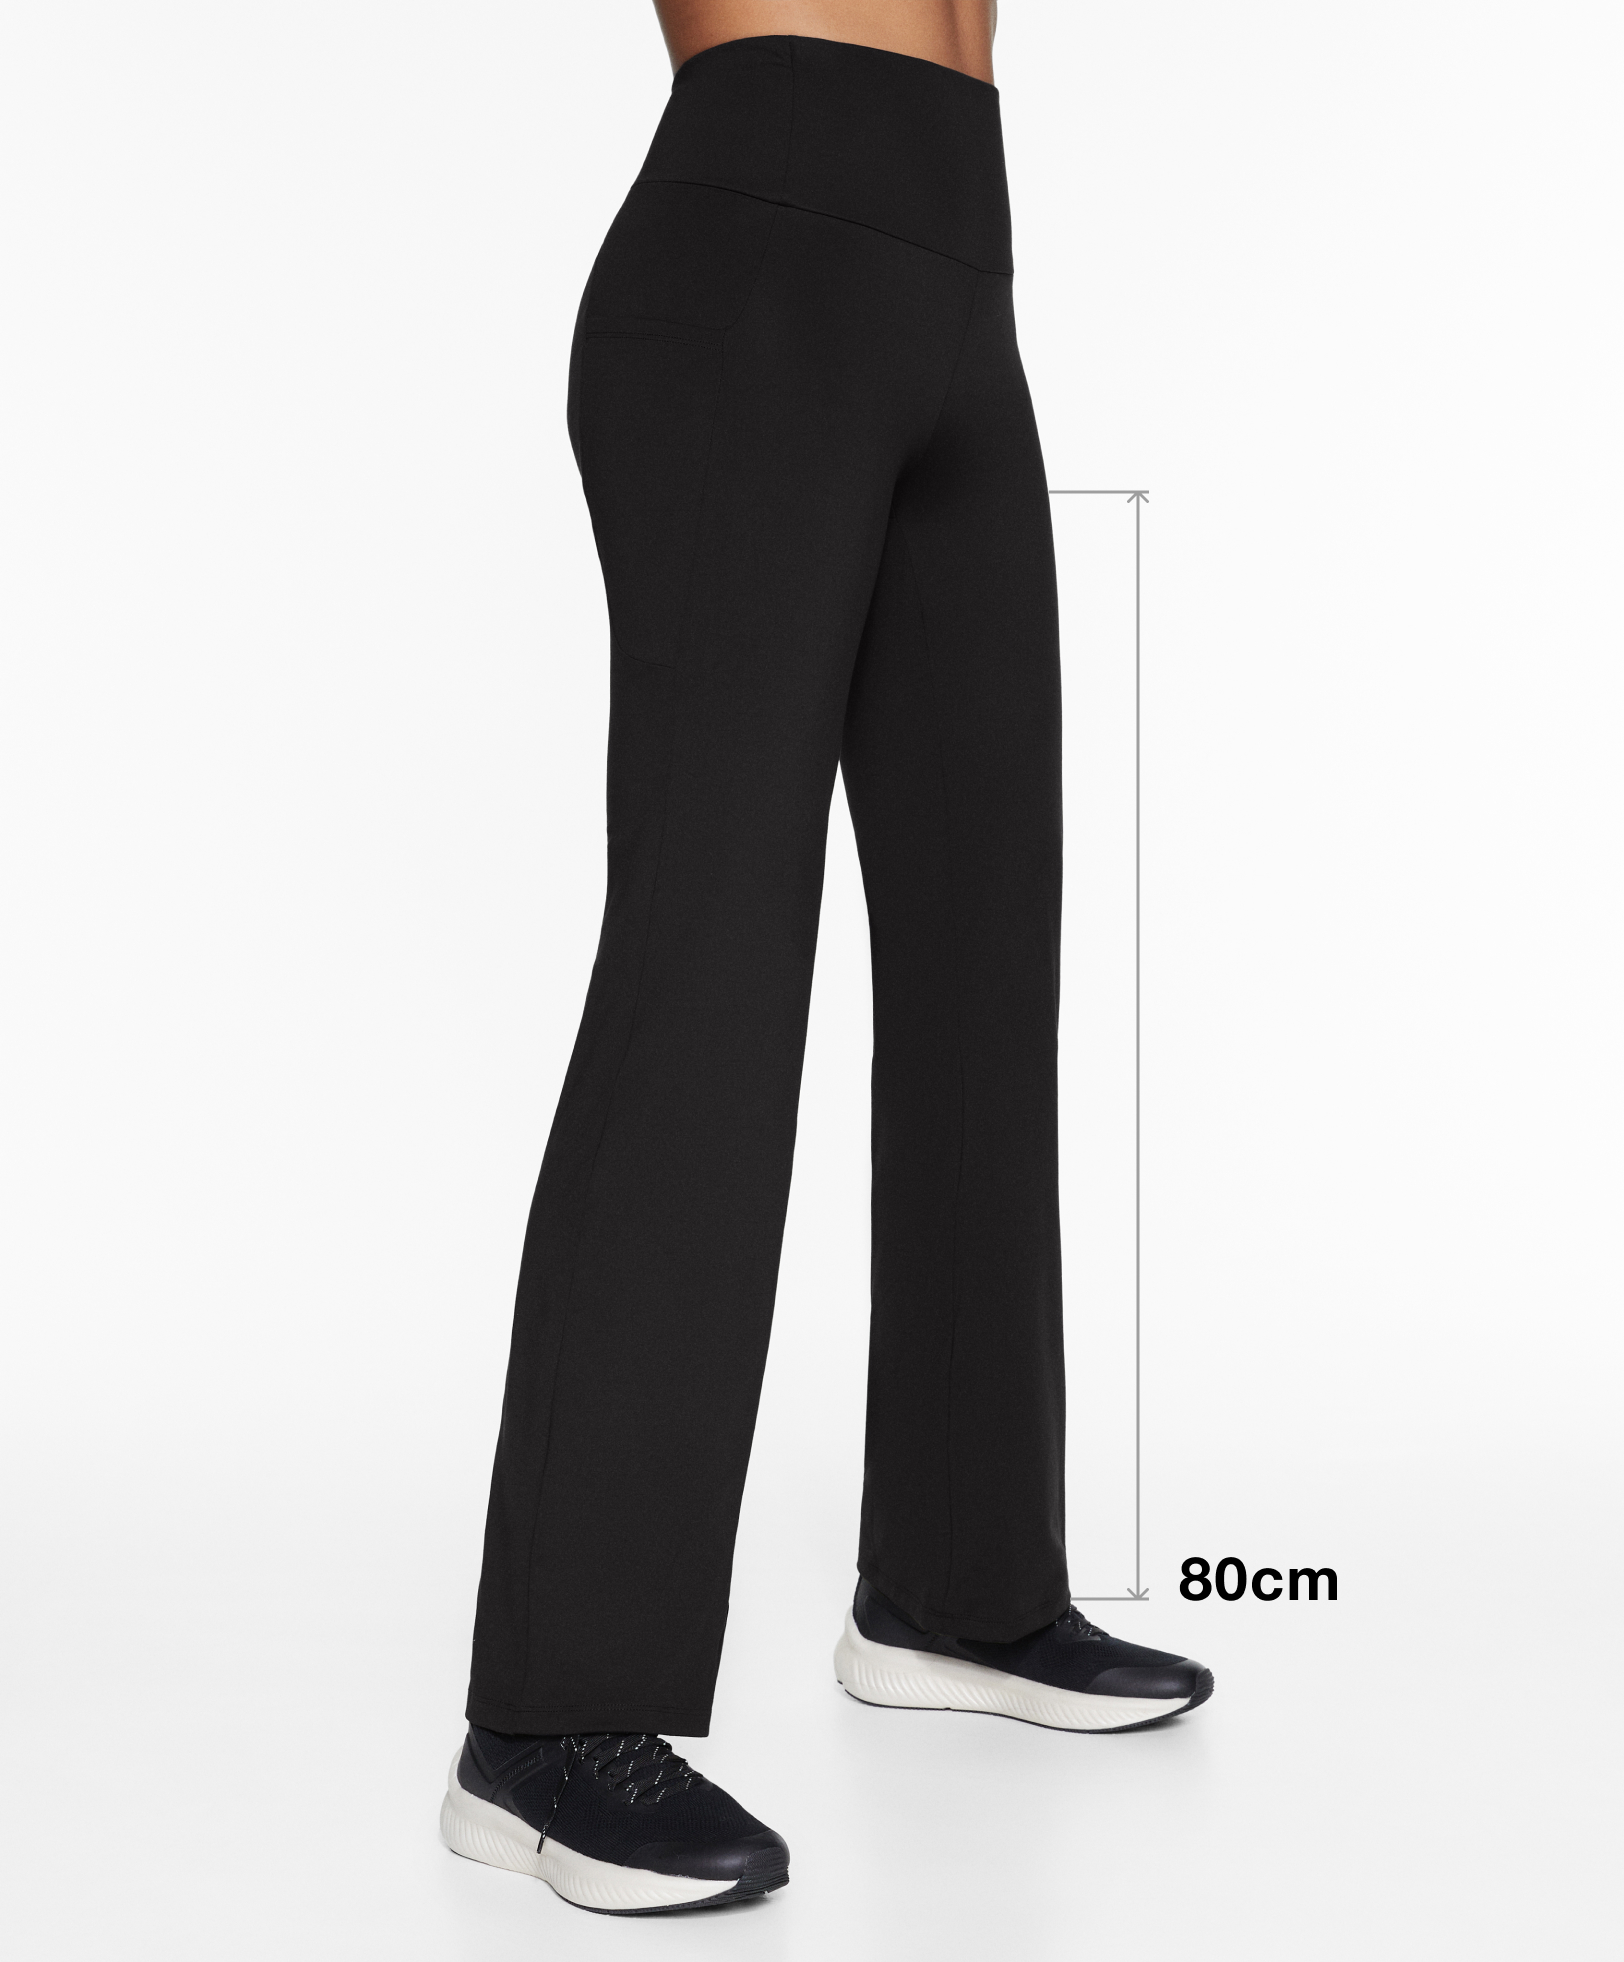 Contrast Bootcut Sweatpants - Yoga Pants - AliExpress